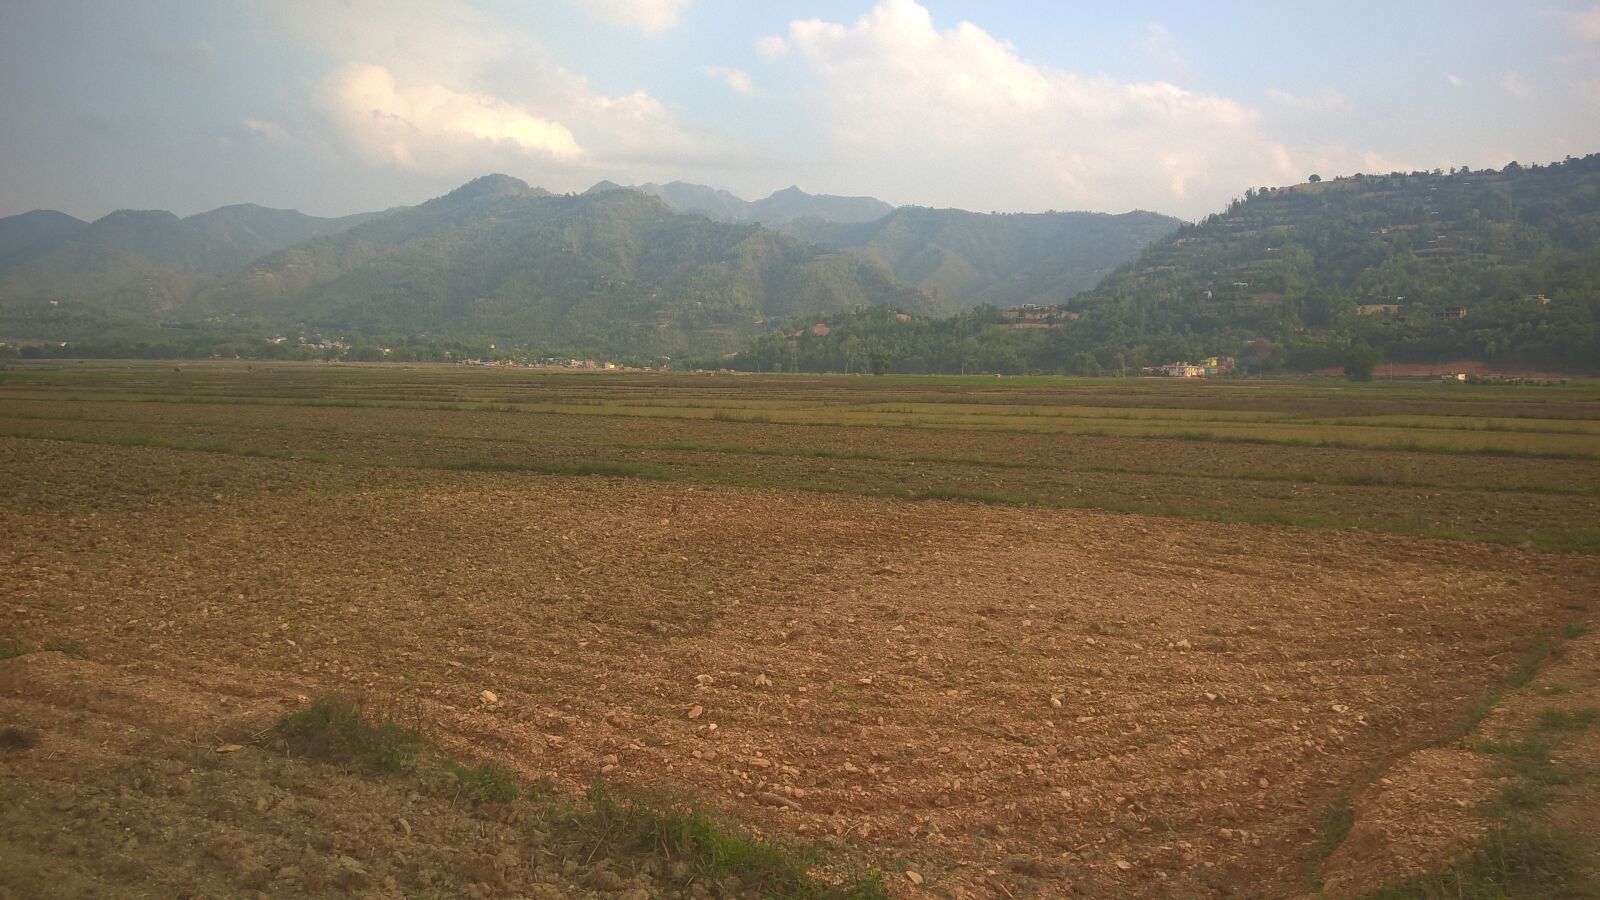 Nokia Lumia 830 sample photo. Crops, plain land, beautiful photography